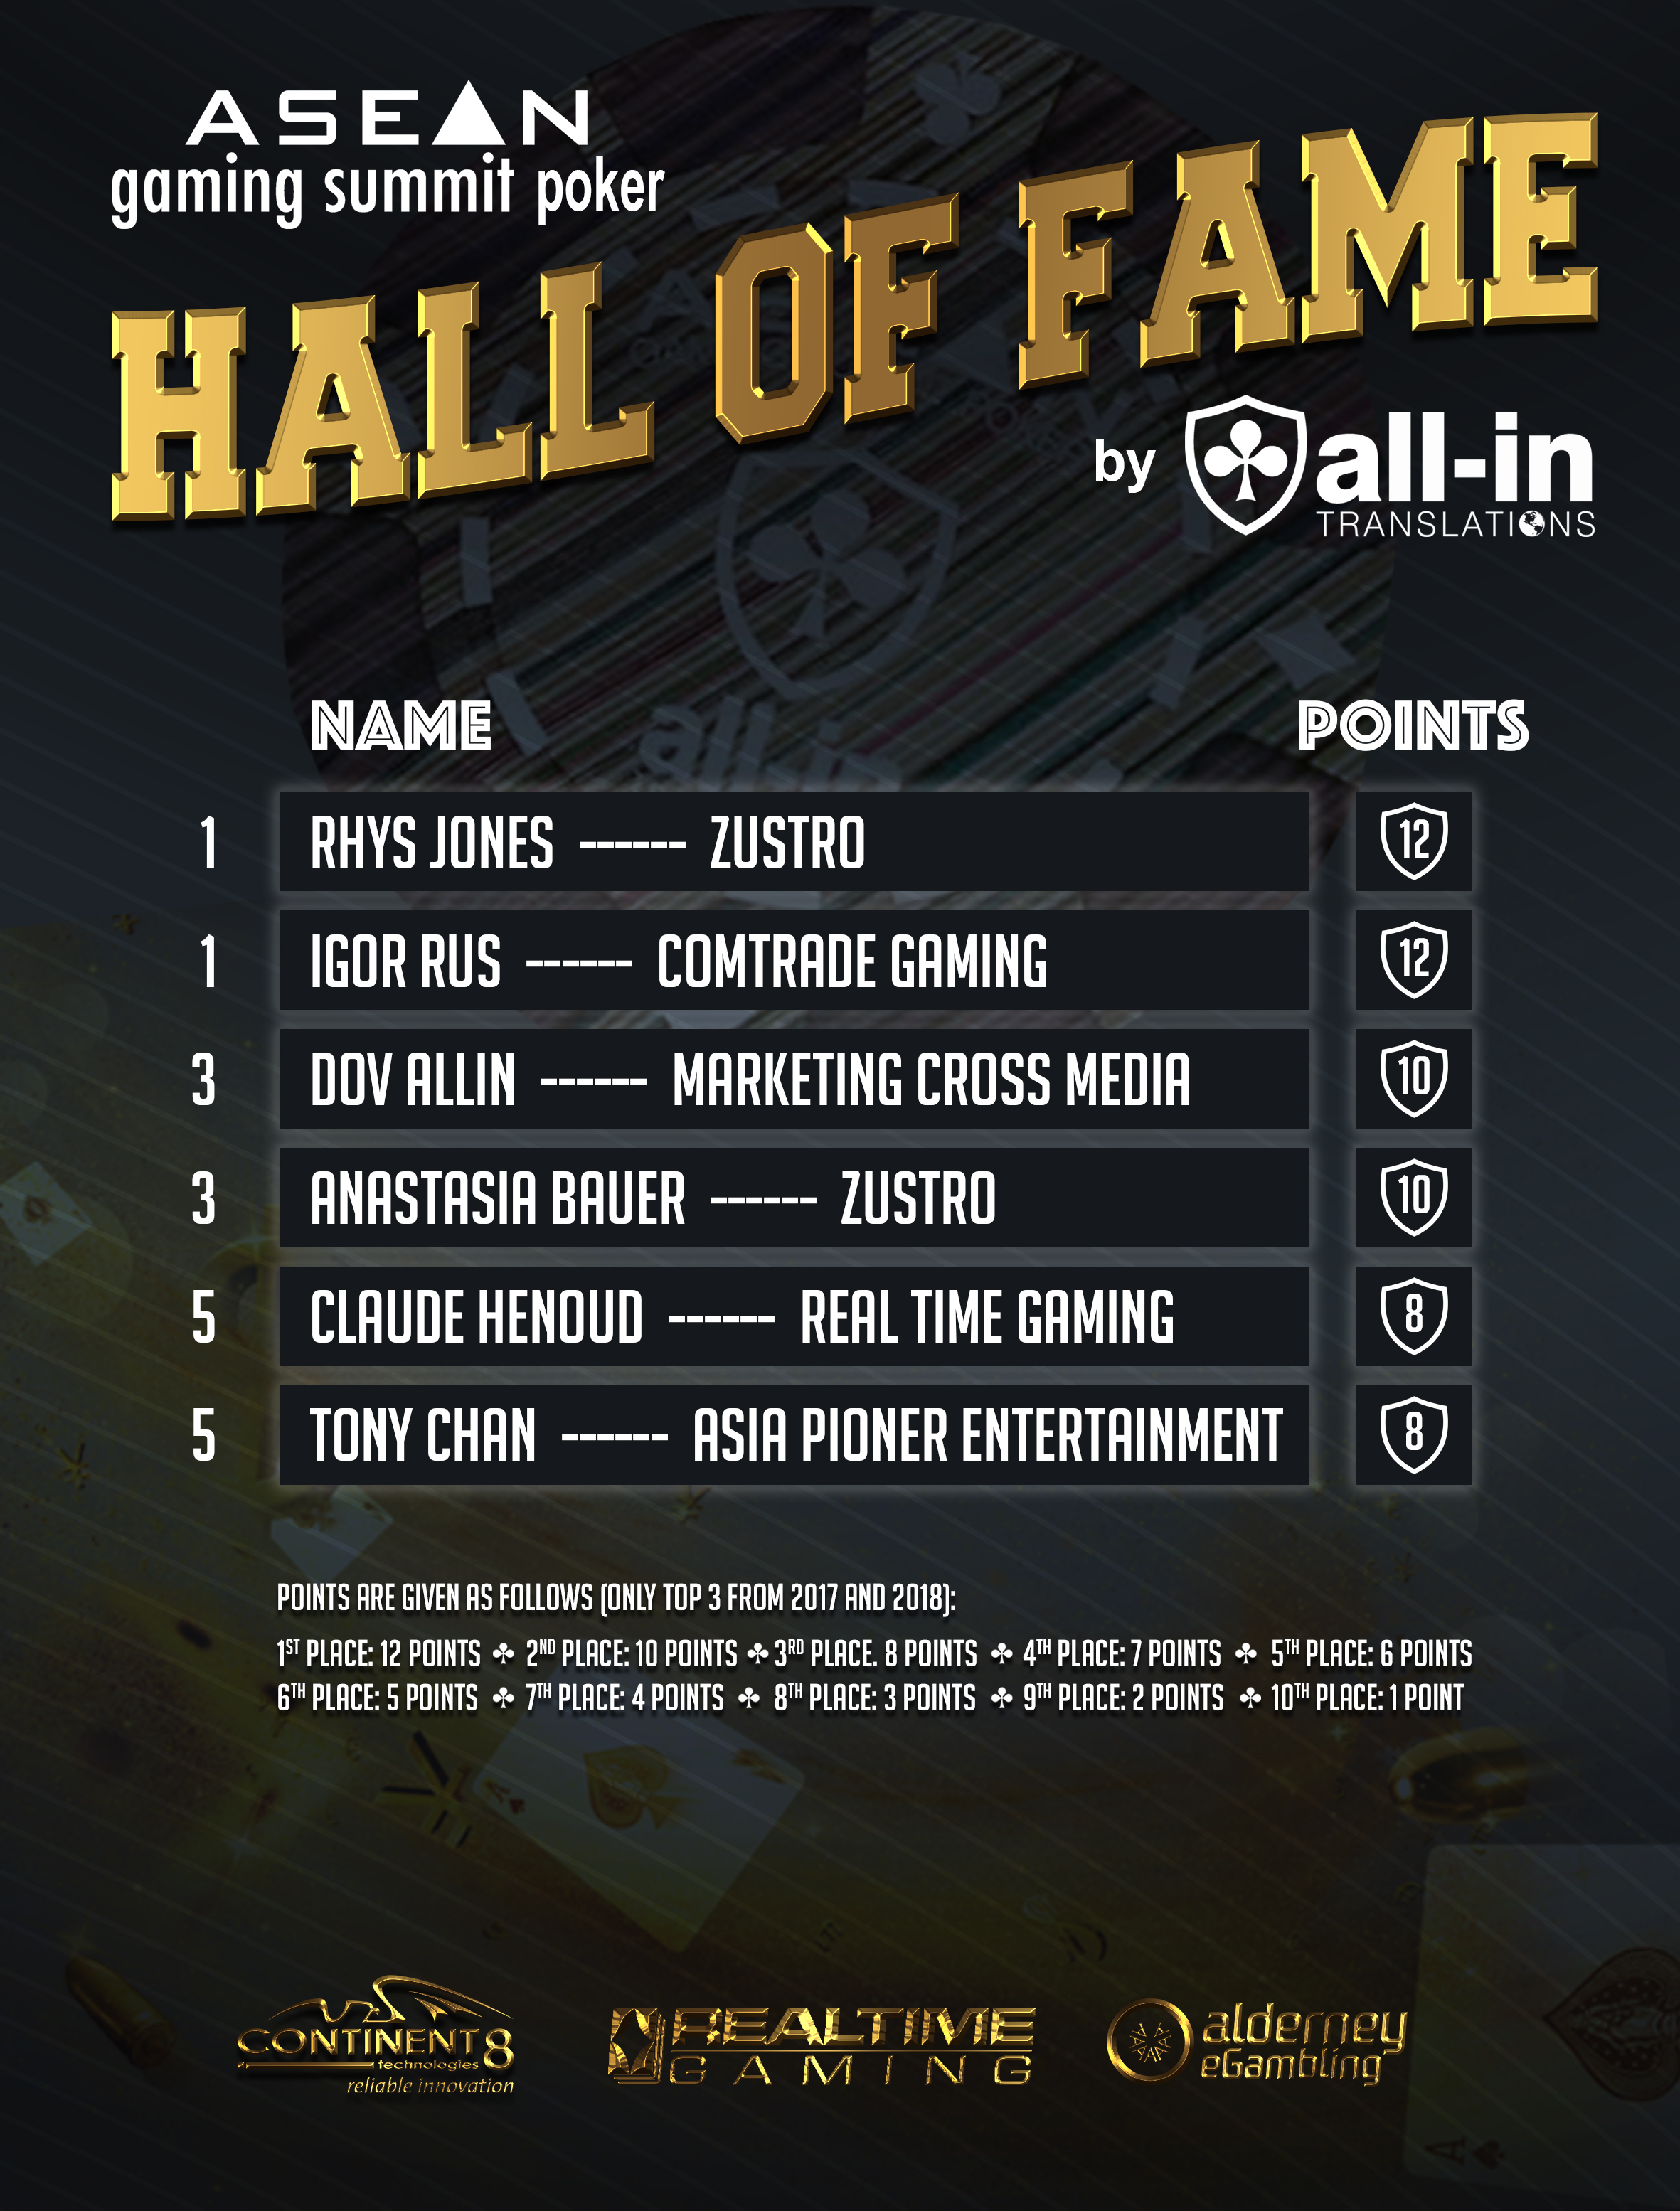 Hall of Fame All-in Translations ASEAN Gaming Summit Poker Freeroll Okada Manila PokerStars Live Room